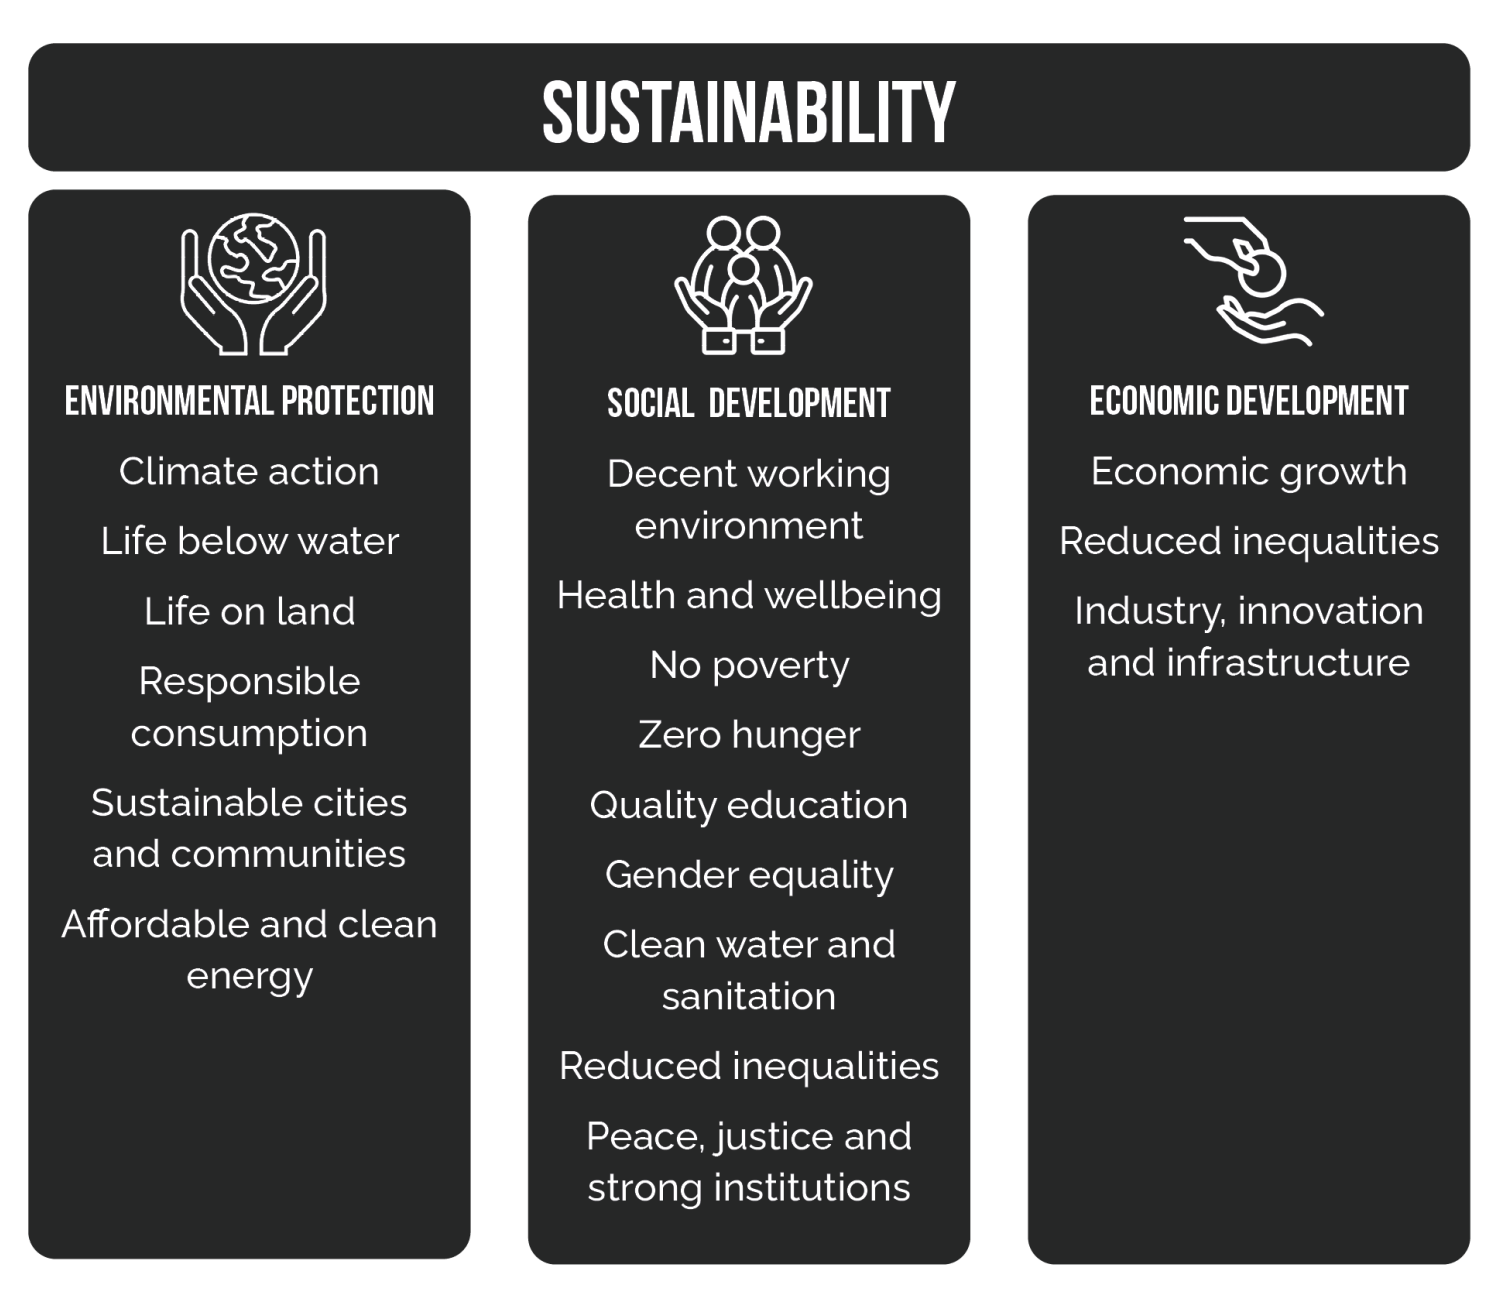 Three pillars of sustainability: environmental, social and economic